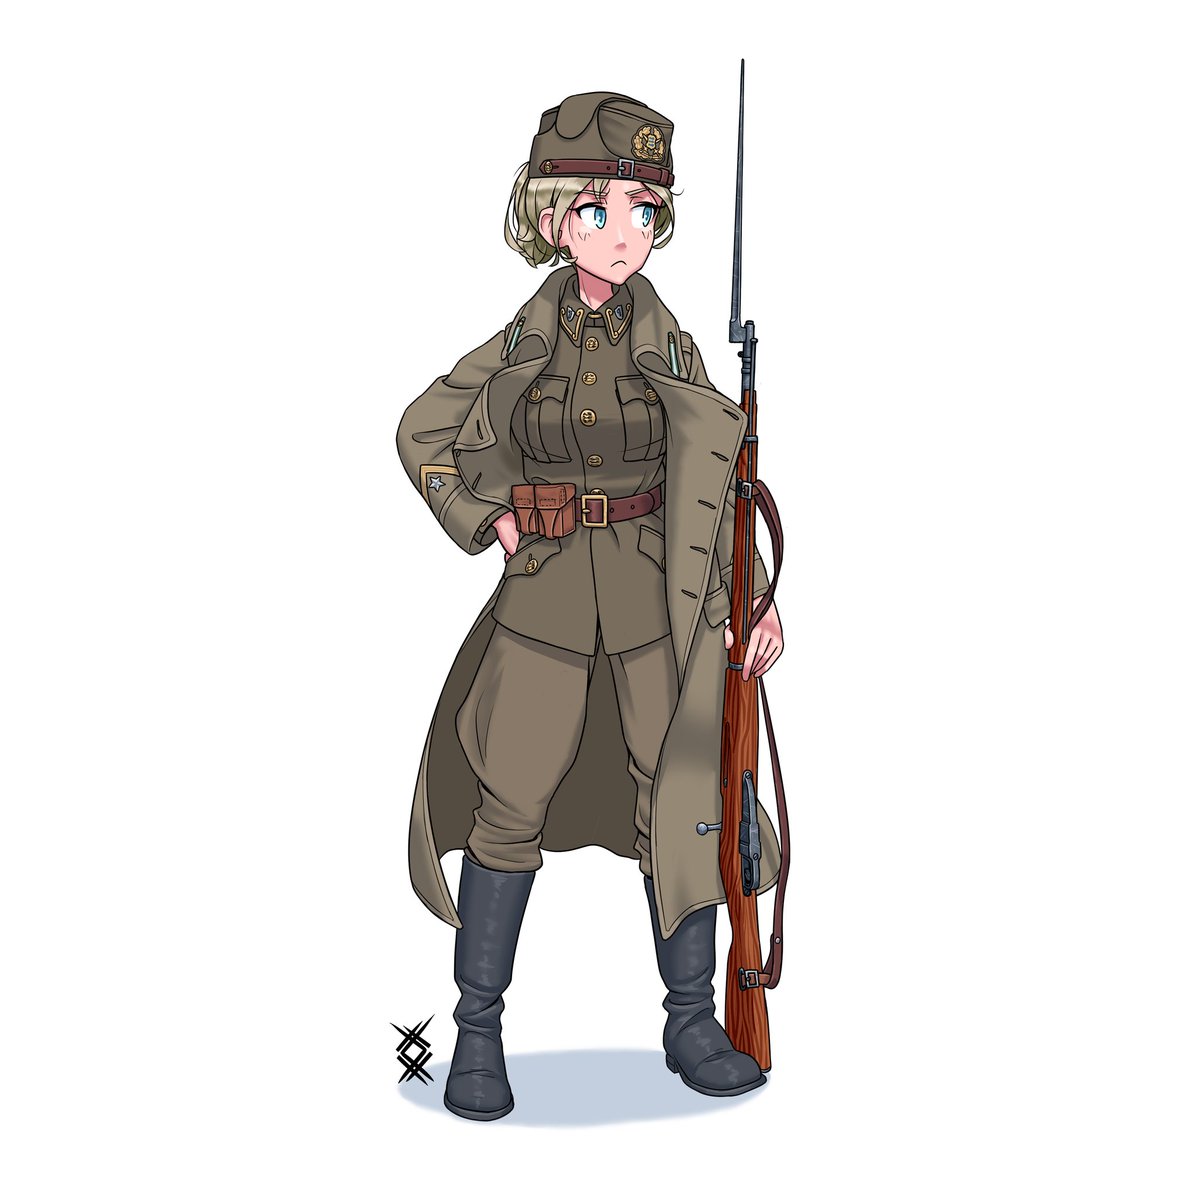 Estonian M1936 uniform

#estonia #mosinnagant #greatcoat #uniform #art #animegirl